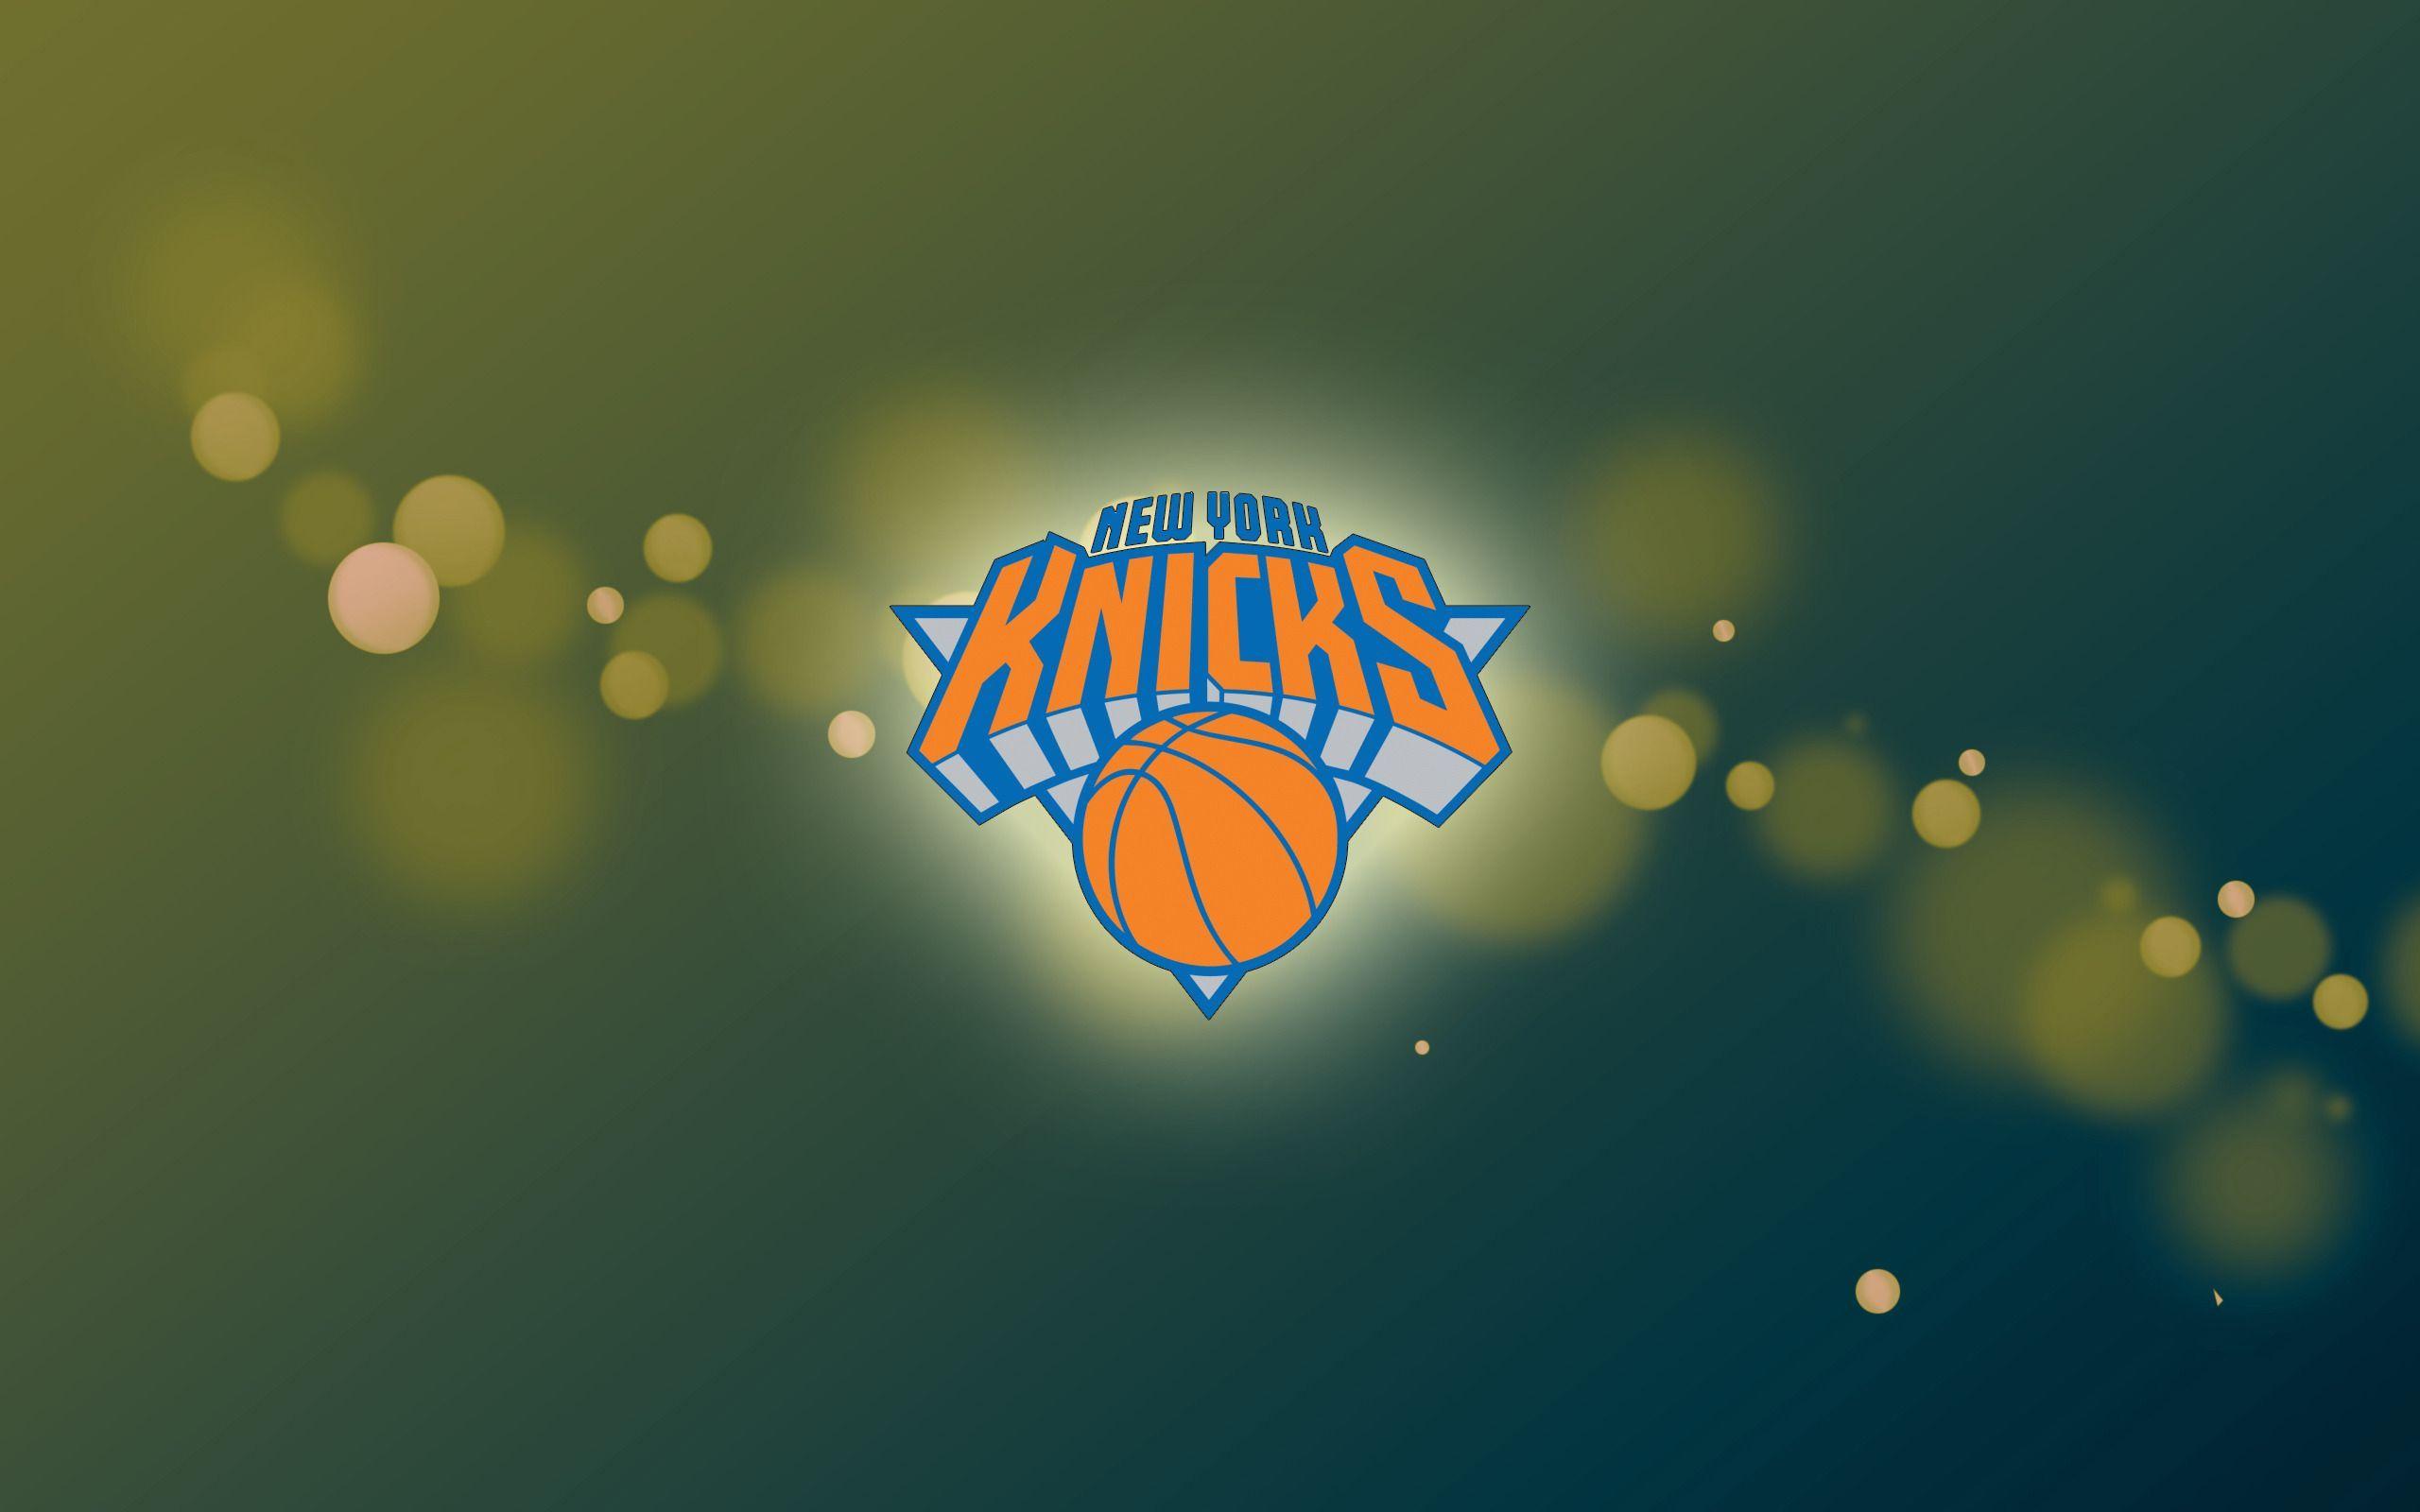 NBA New York Knicks Logo Team wallpaper HD 2016 in Basketball